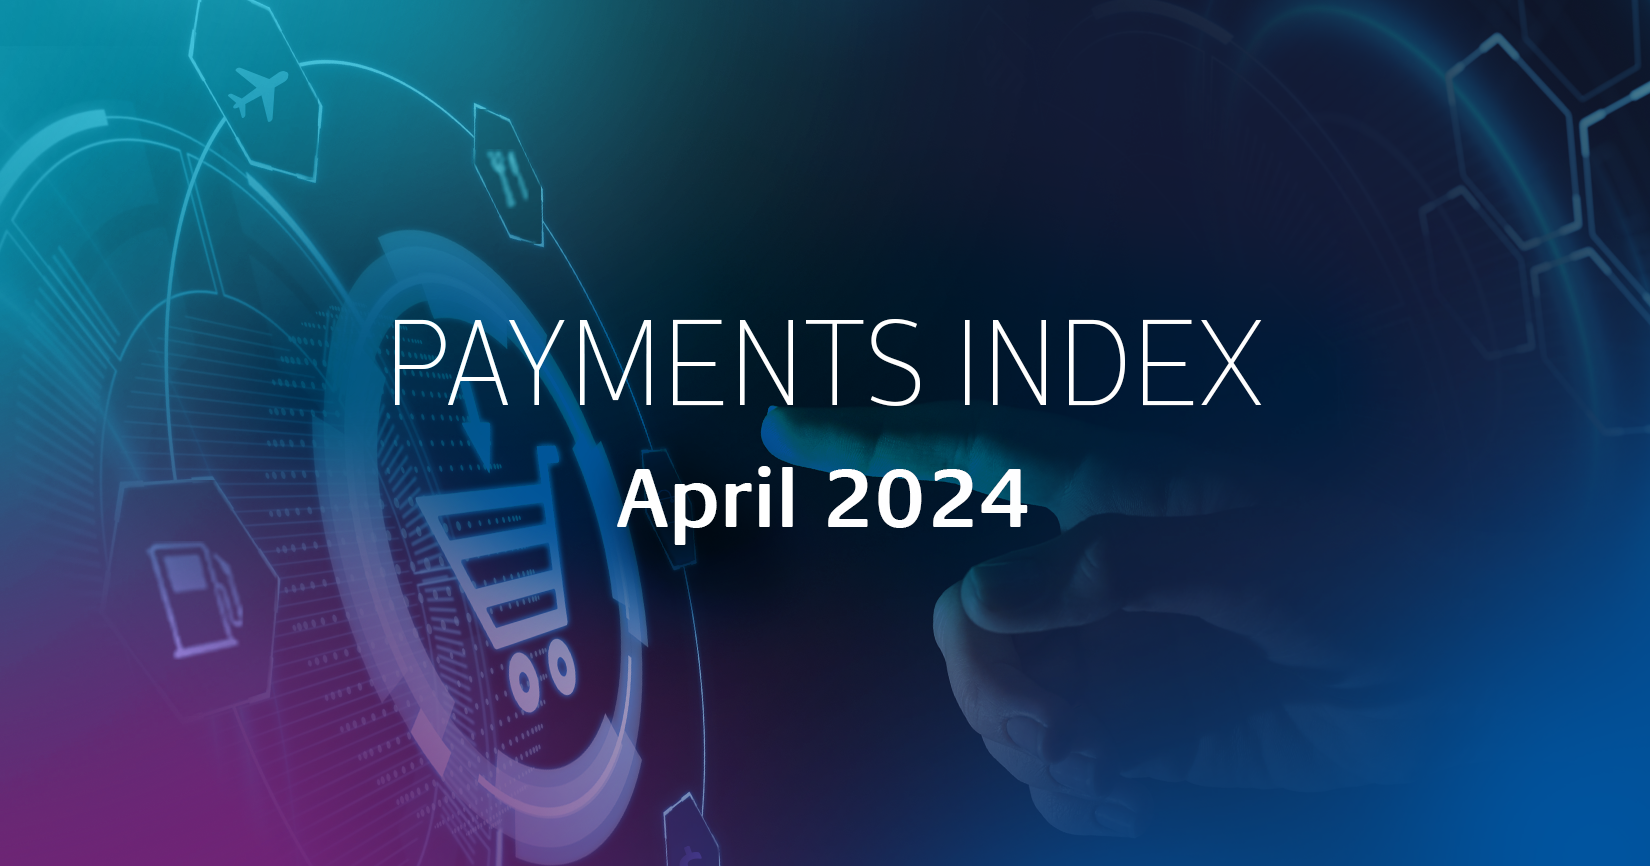 Payments Index April 2024: A Deep Dive into Digital Payments